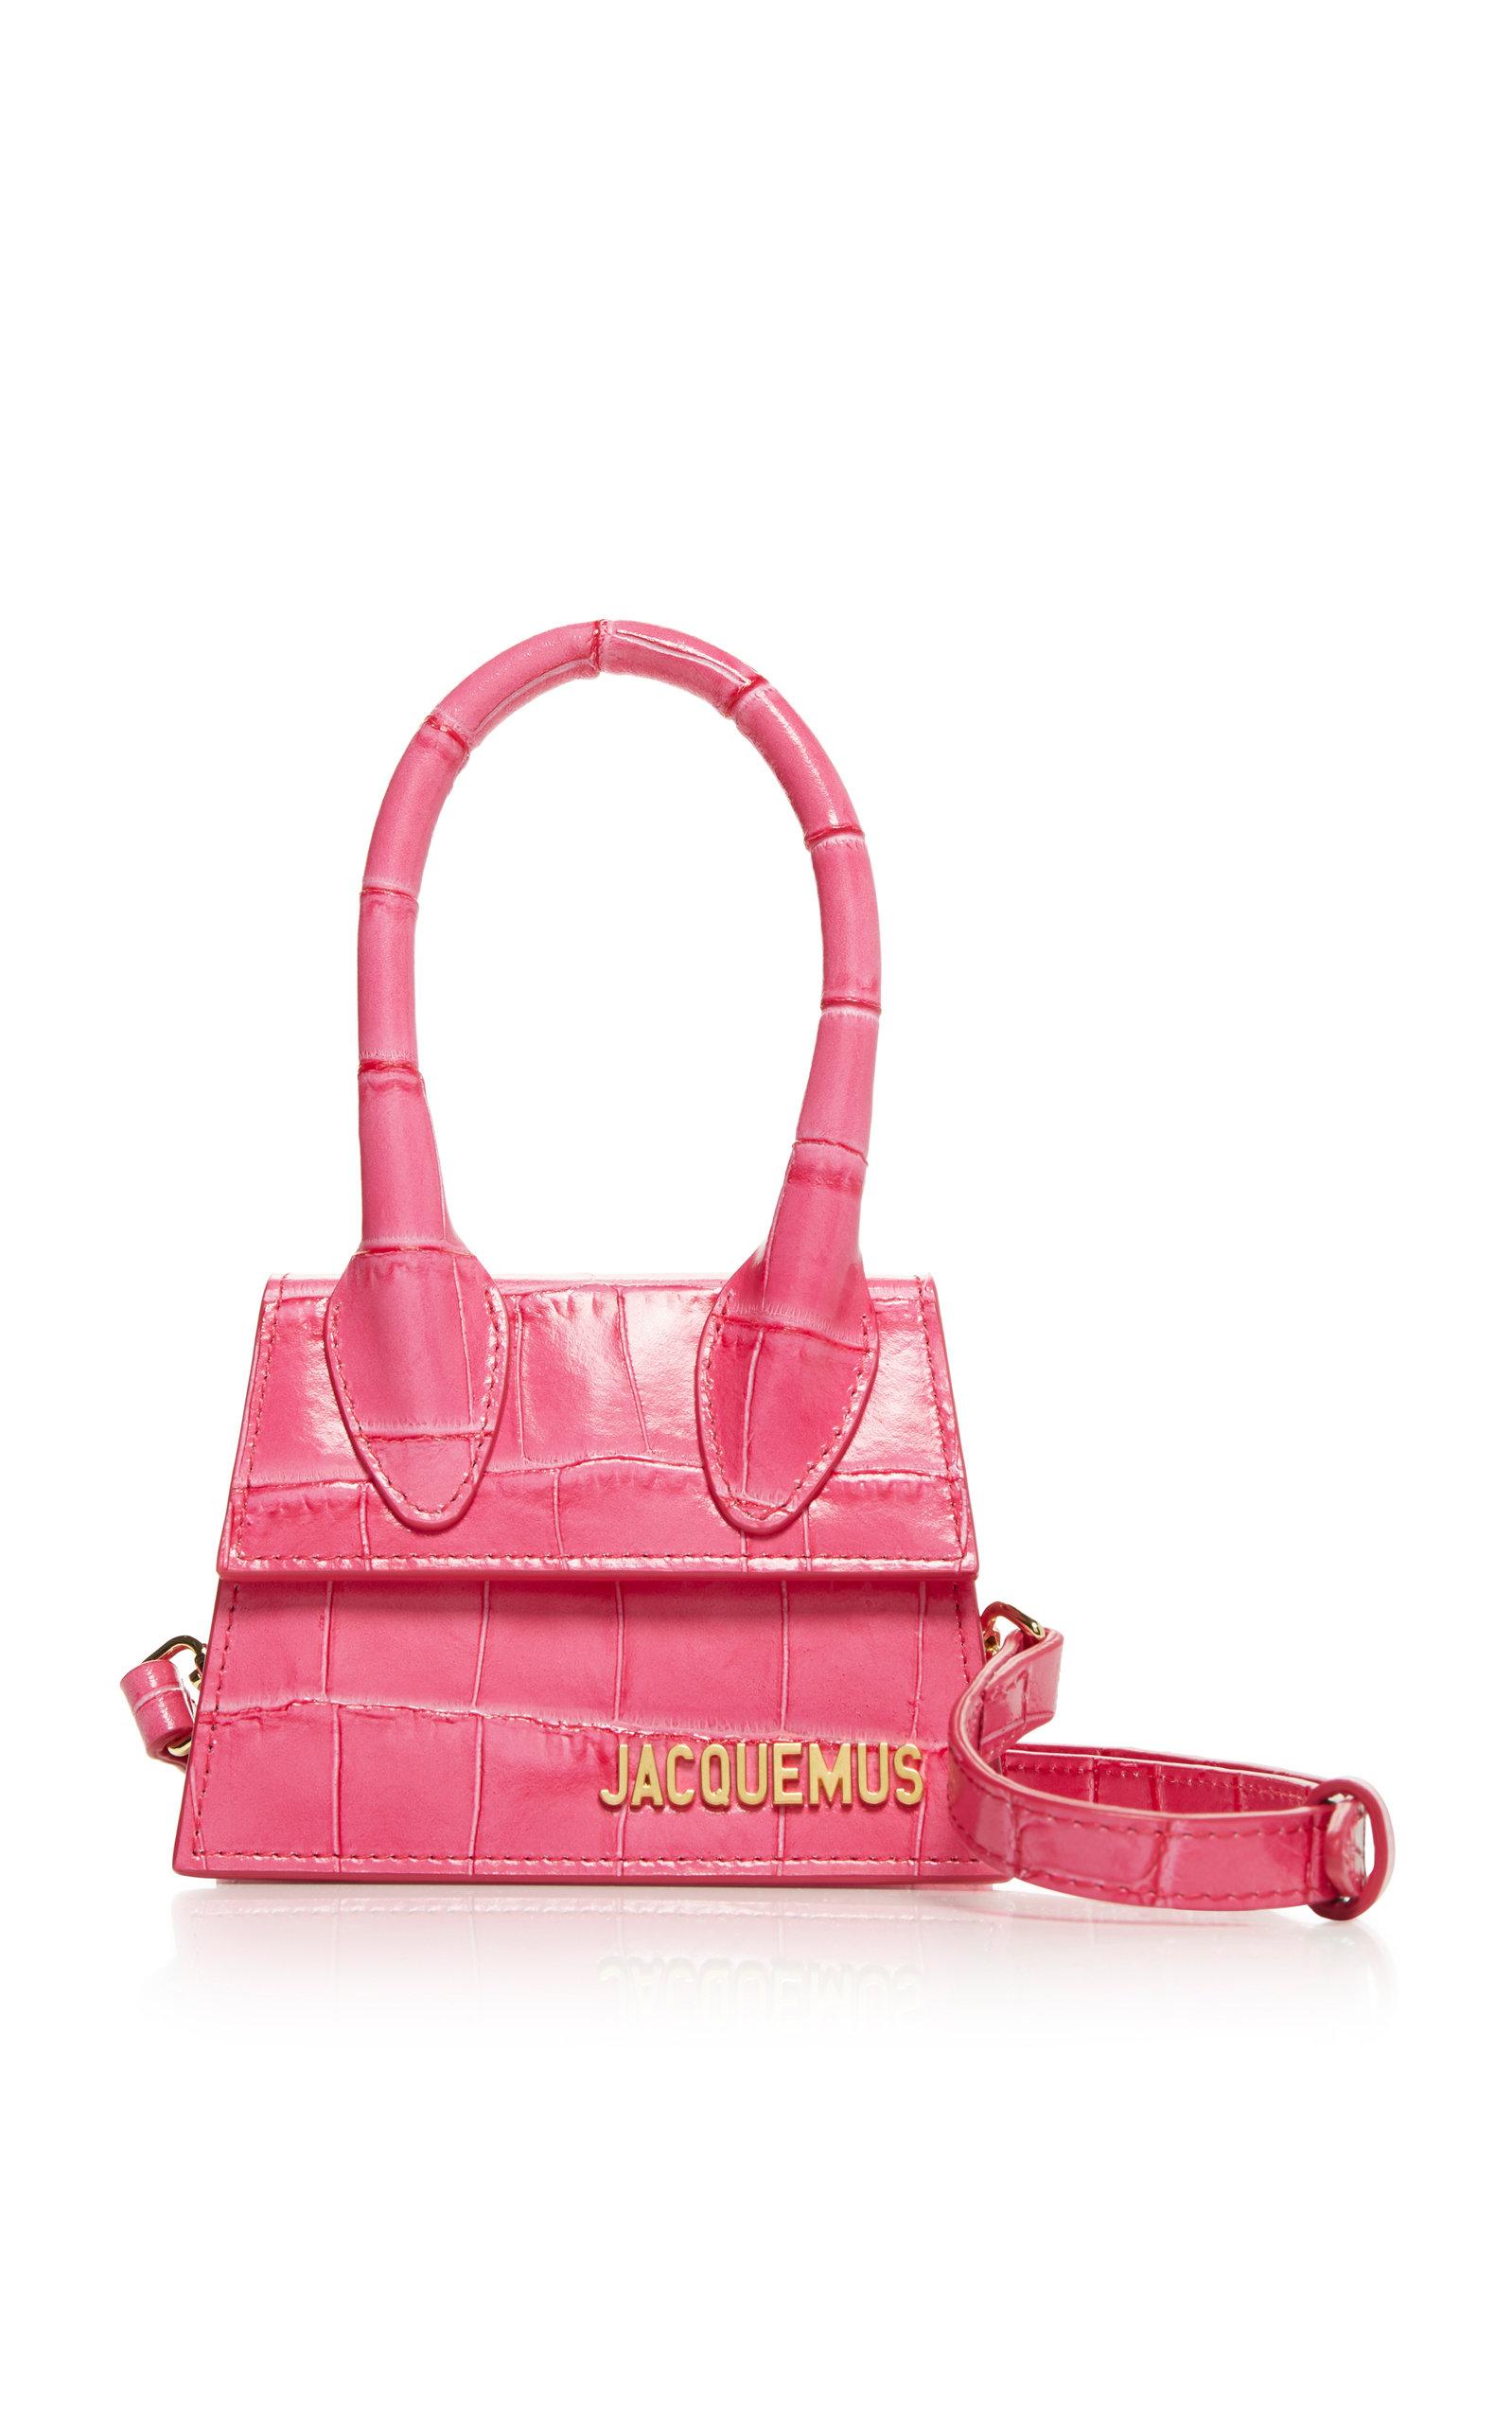 Klas Niet genoeg Misleidend Jacquemus Le Chiquito Leather Mini Bag in Pink | Lyst